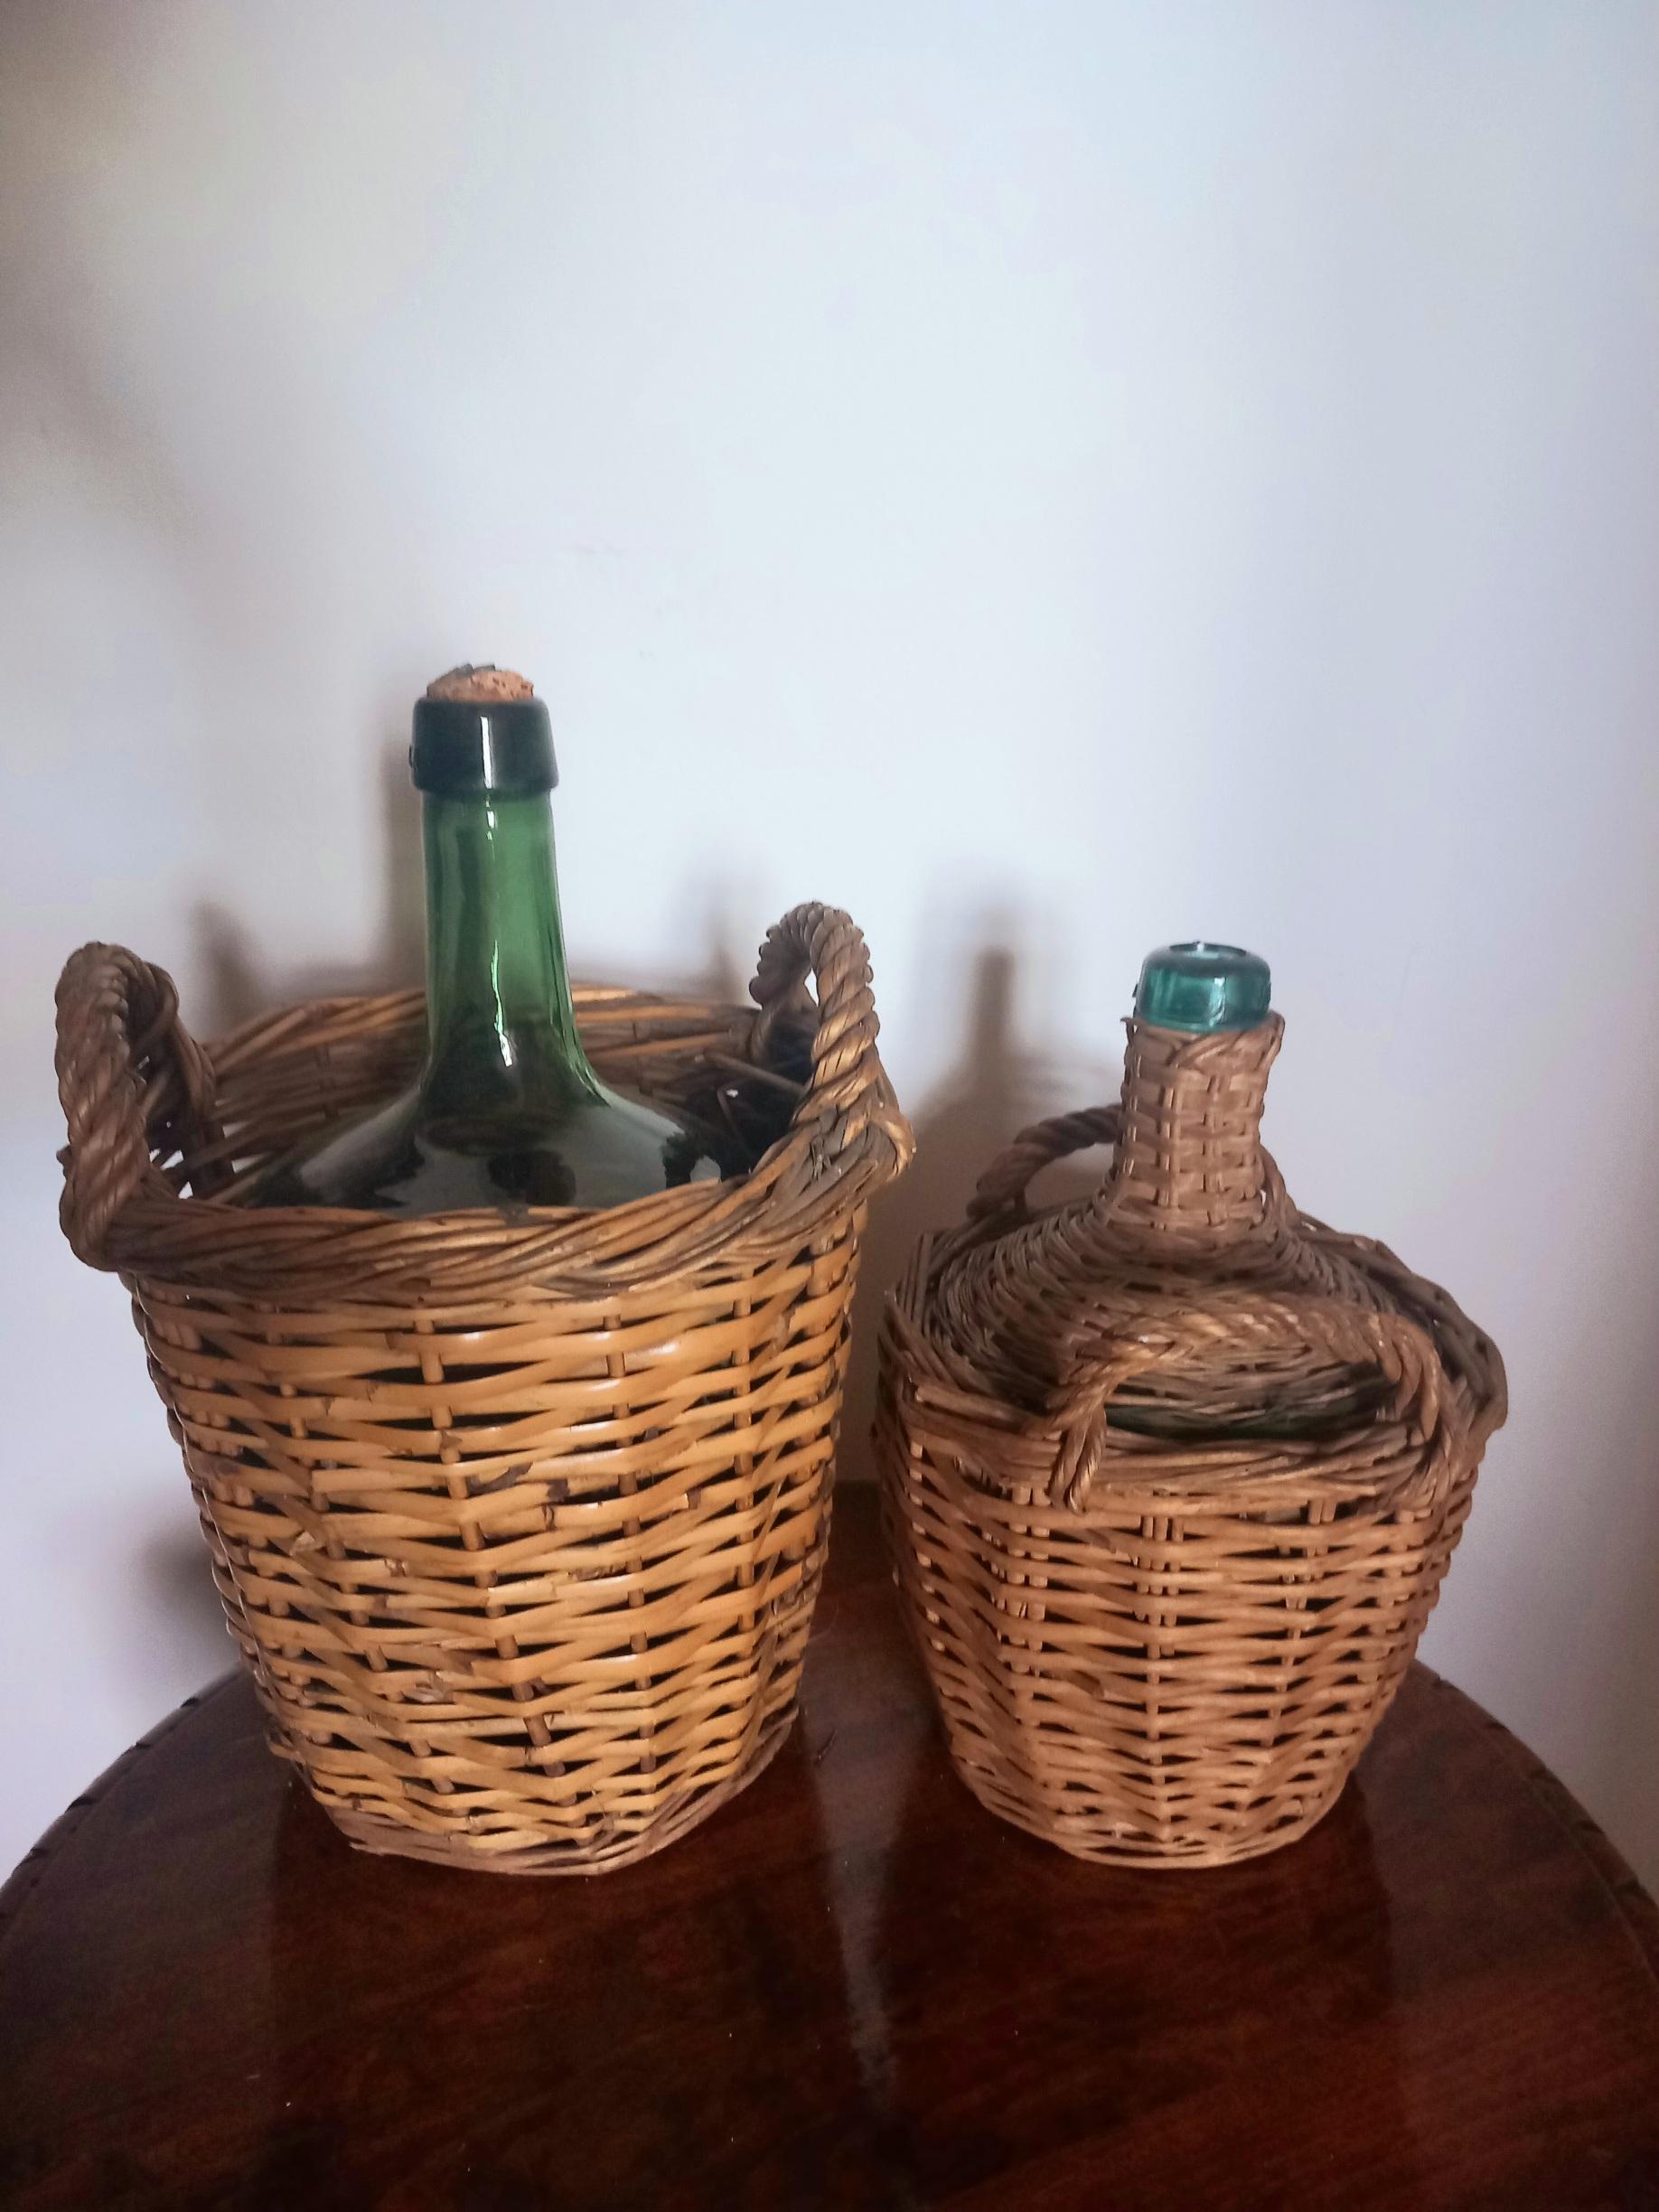  Wine Bottle Coolers Glass Wicker Spain Early 20th Century For Sale 2